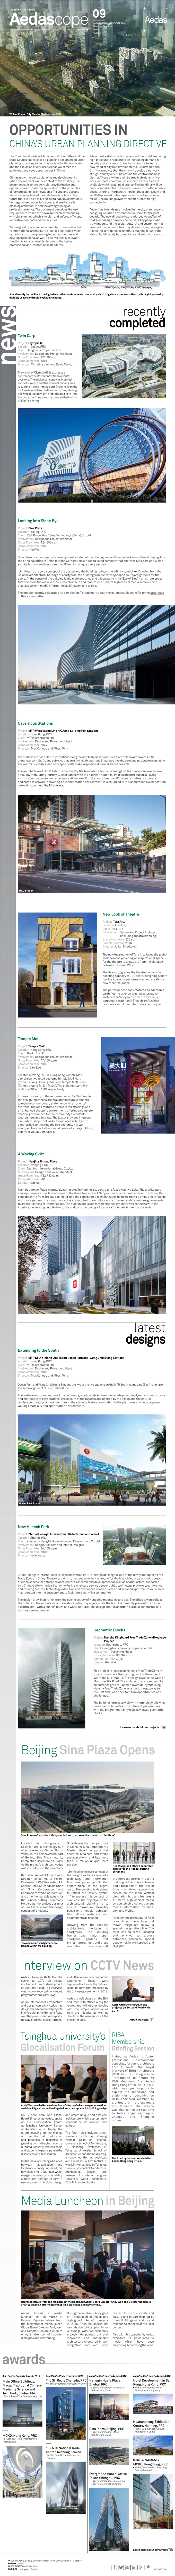 Opportunities in China’S Urban Aedascope Planning Directive Architecture Arts Team Graphics Interiors Landscape Urban Design & Masterplanning News Awards